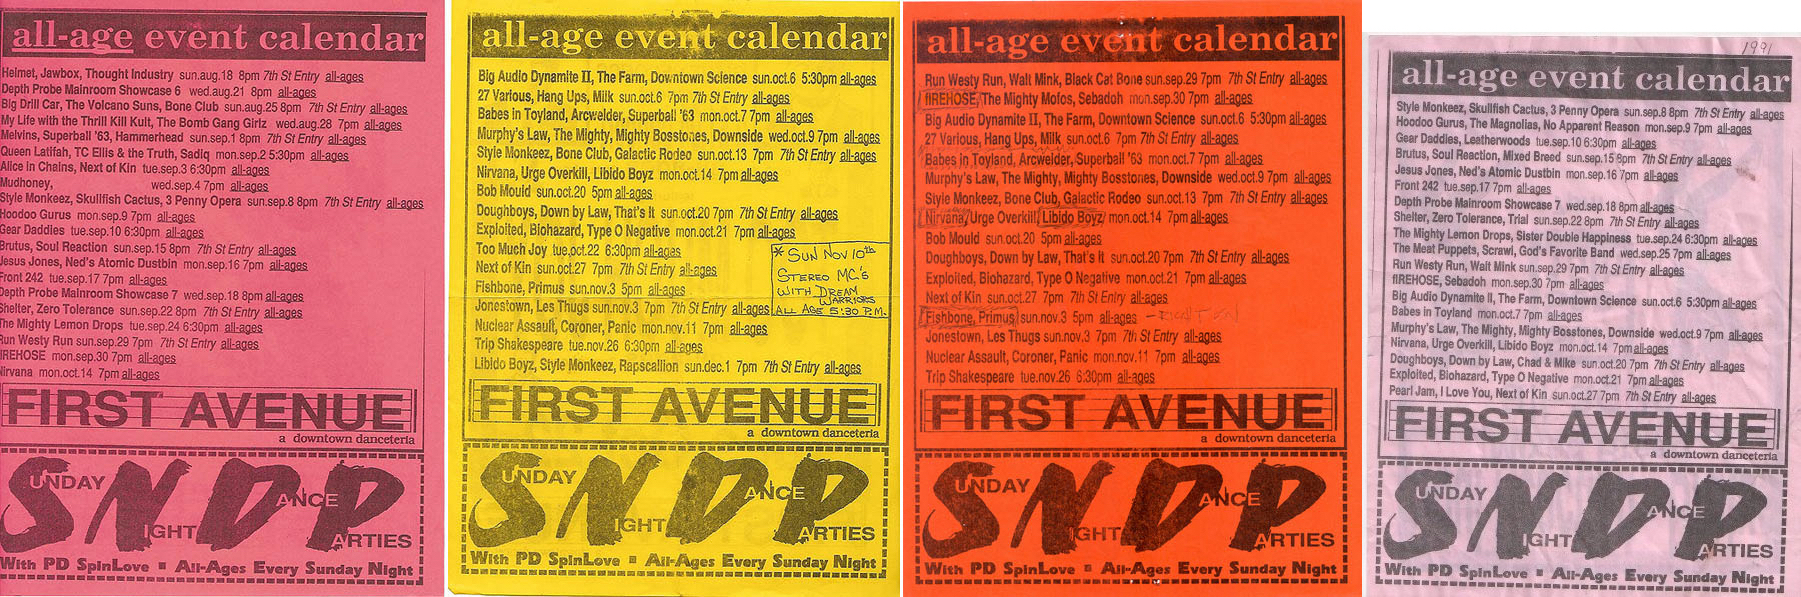 Venue events calendar